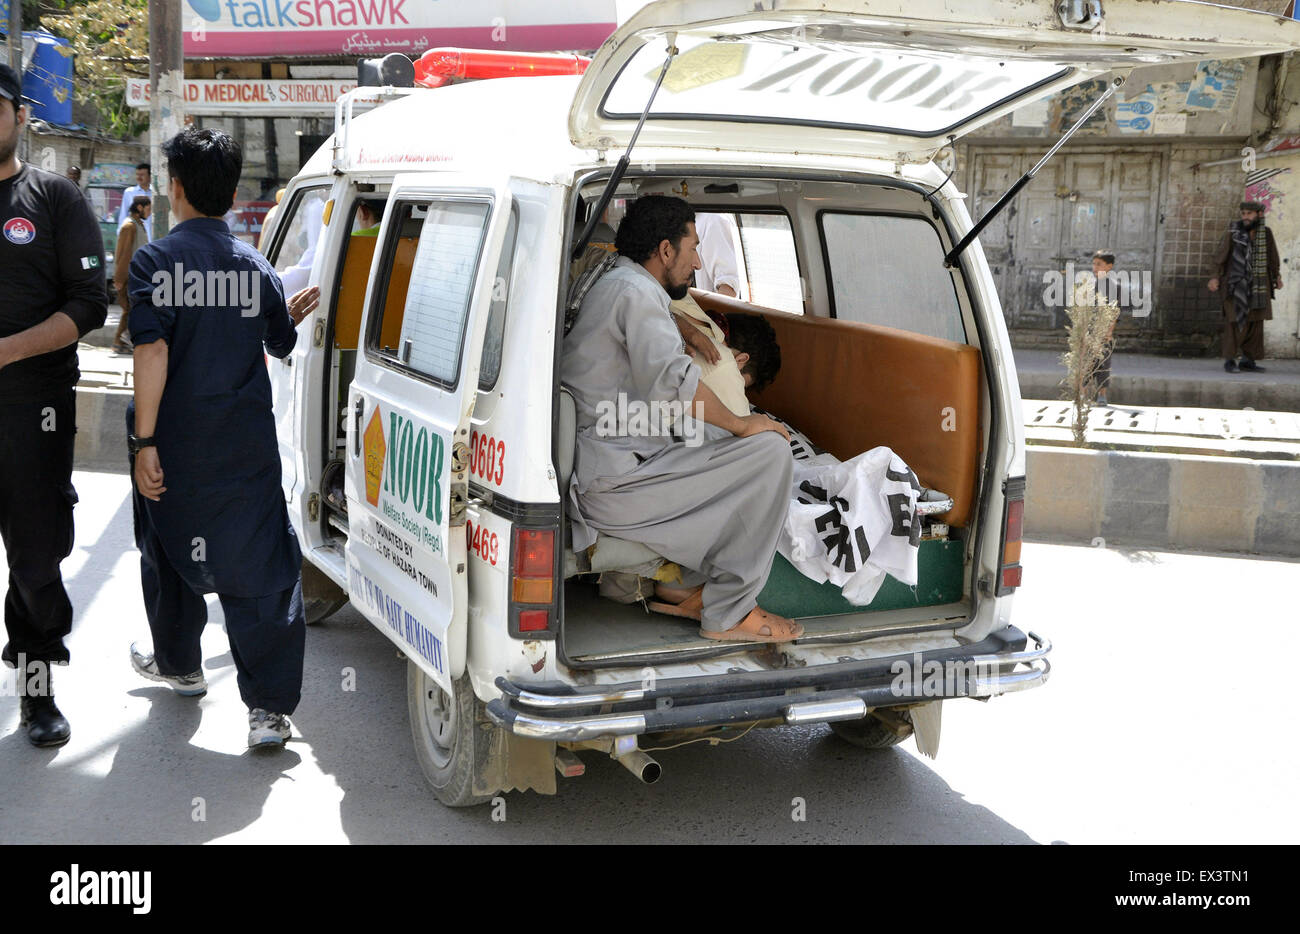 quetta-pakistan-6th-july-2015-an-ambulance-carrying-bodies-arrives-EX3TN1.jpg